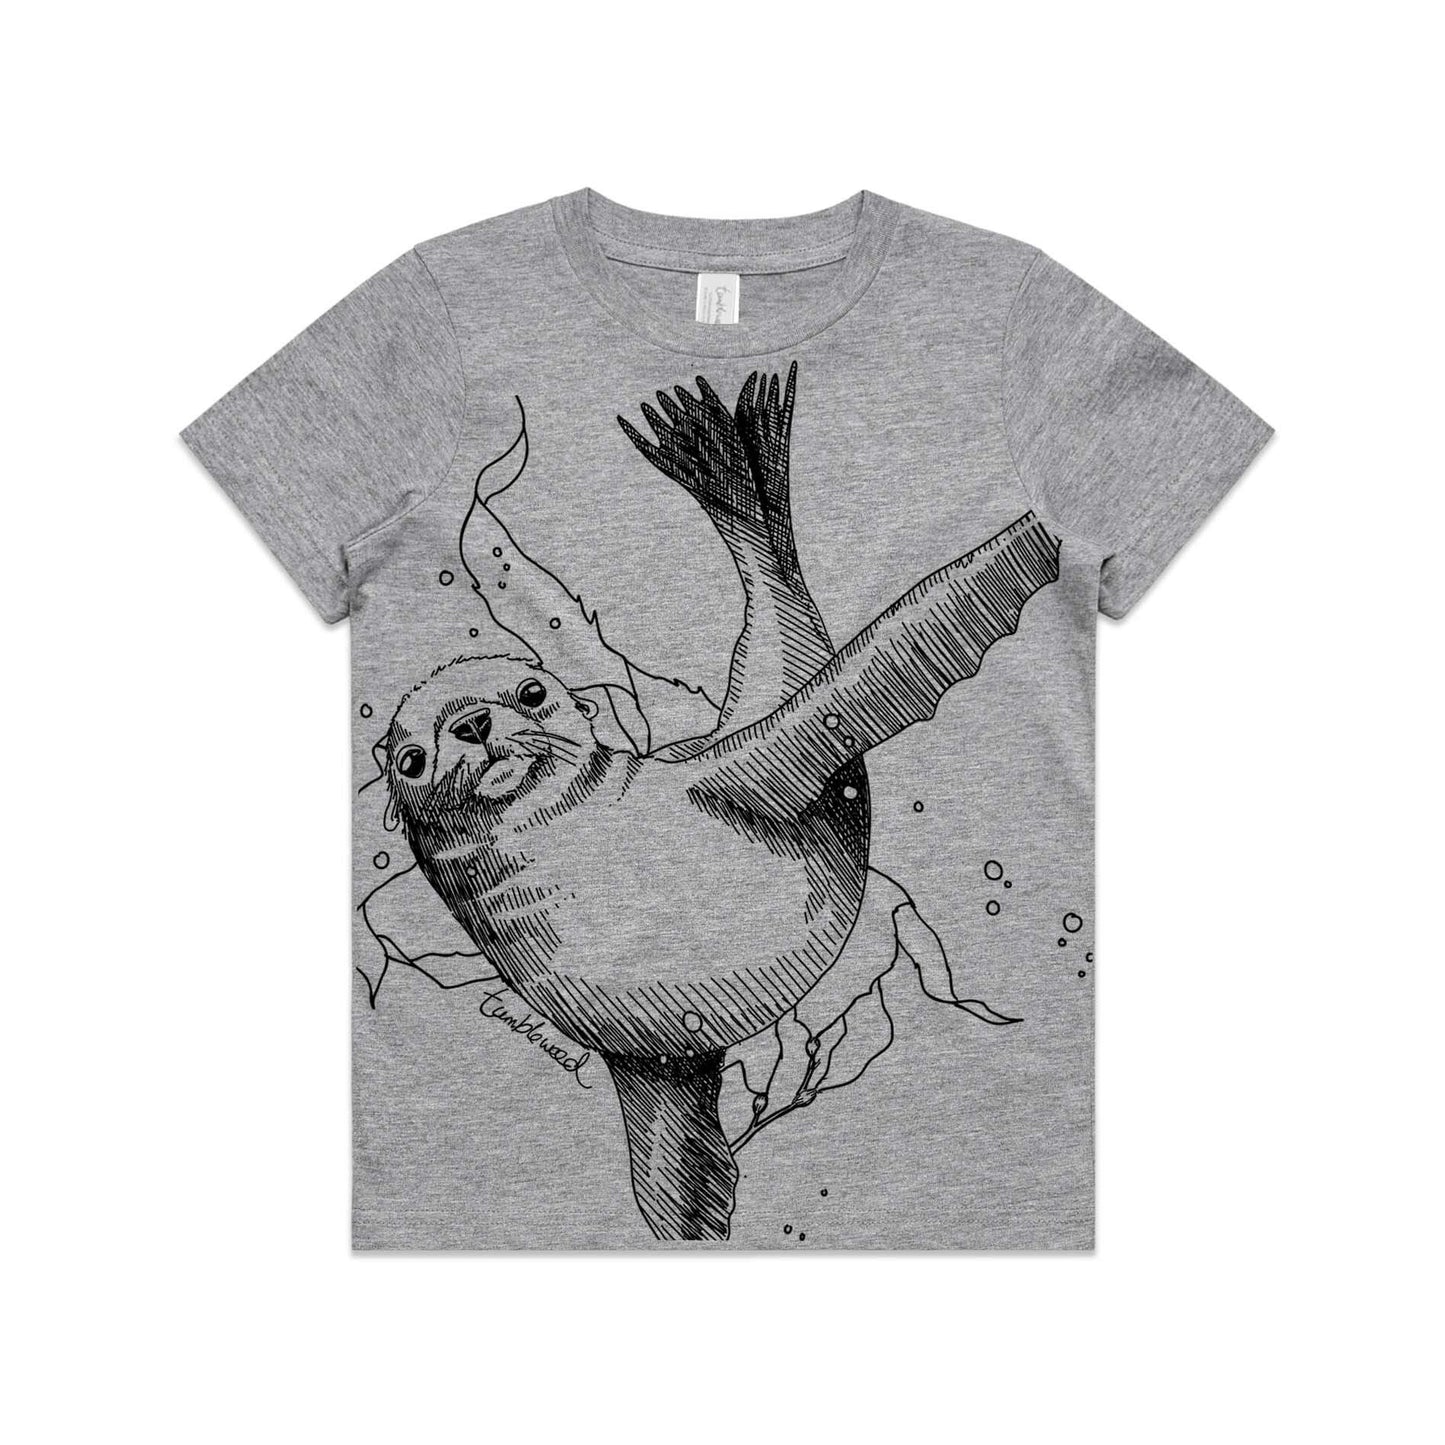 Grey, kids’ t-shirt featuring a screen printed New Zealand sea lion design.